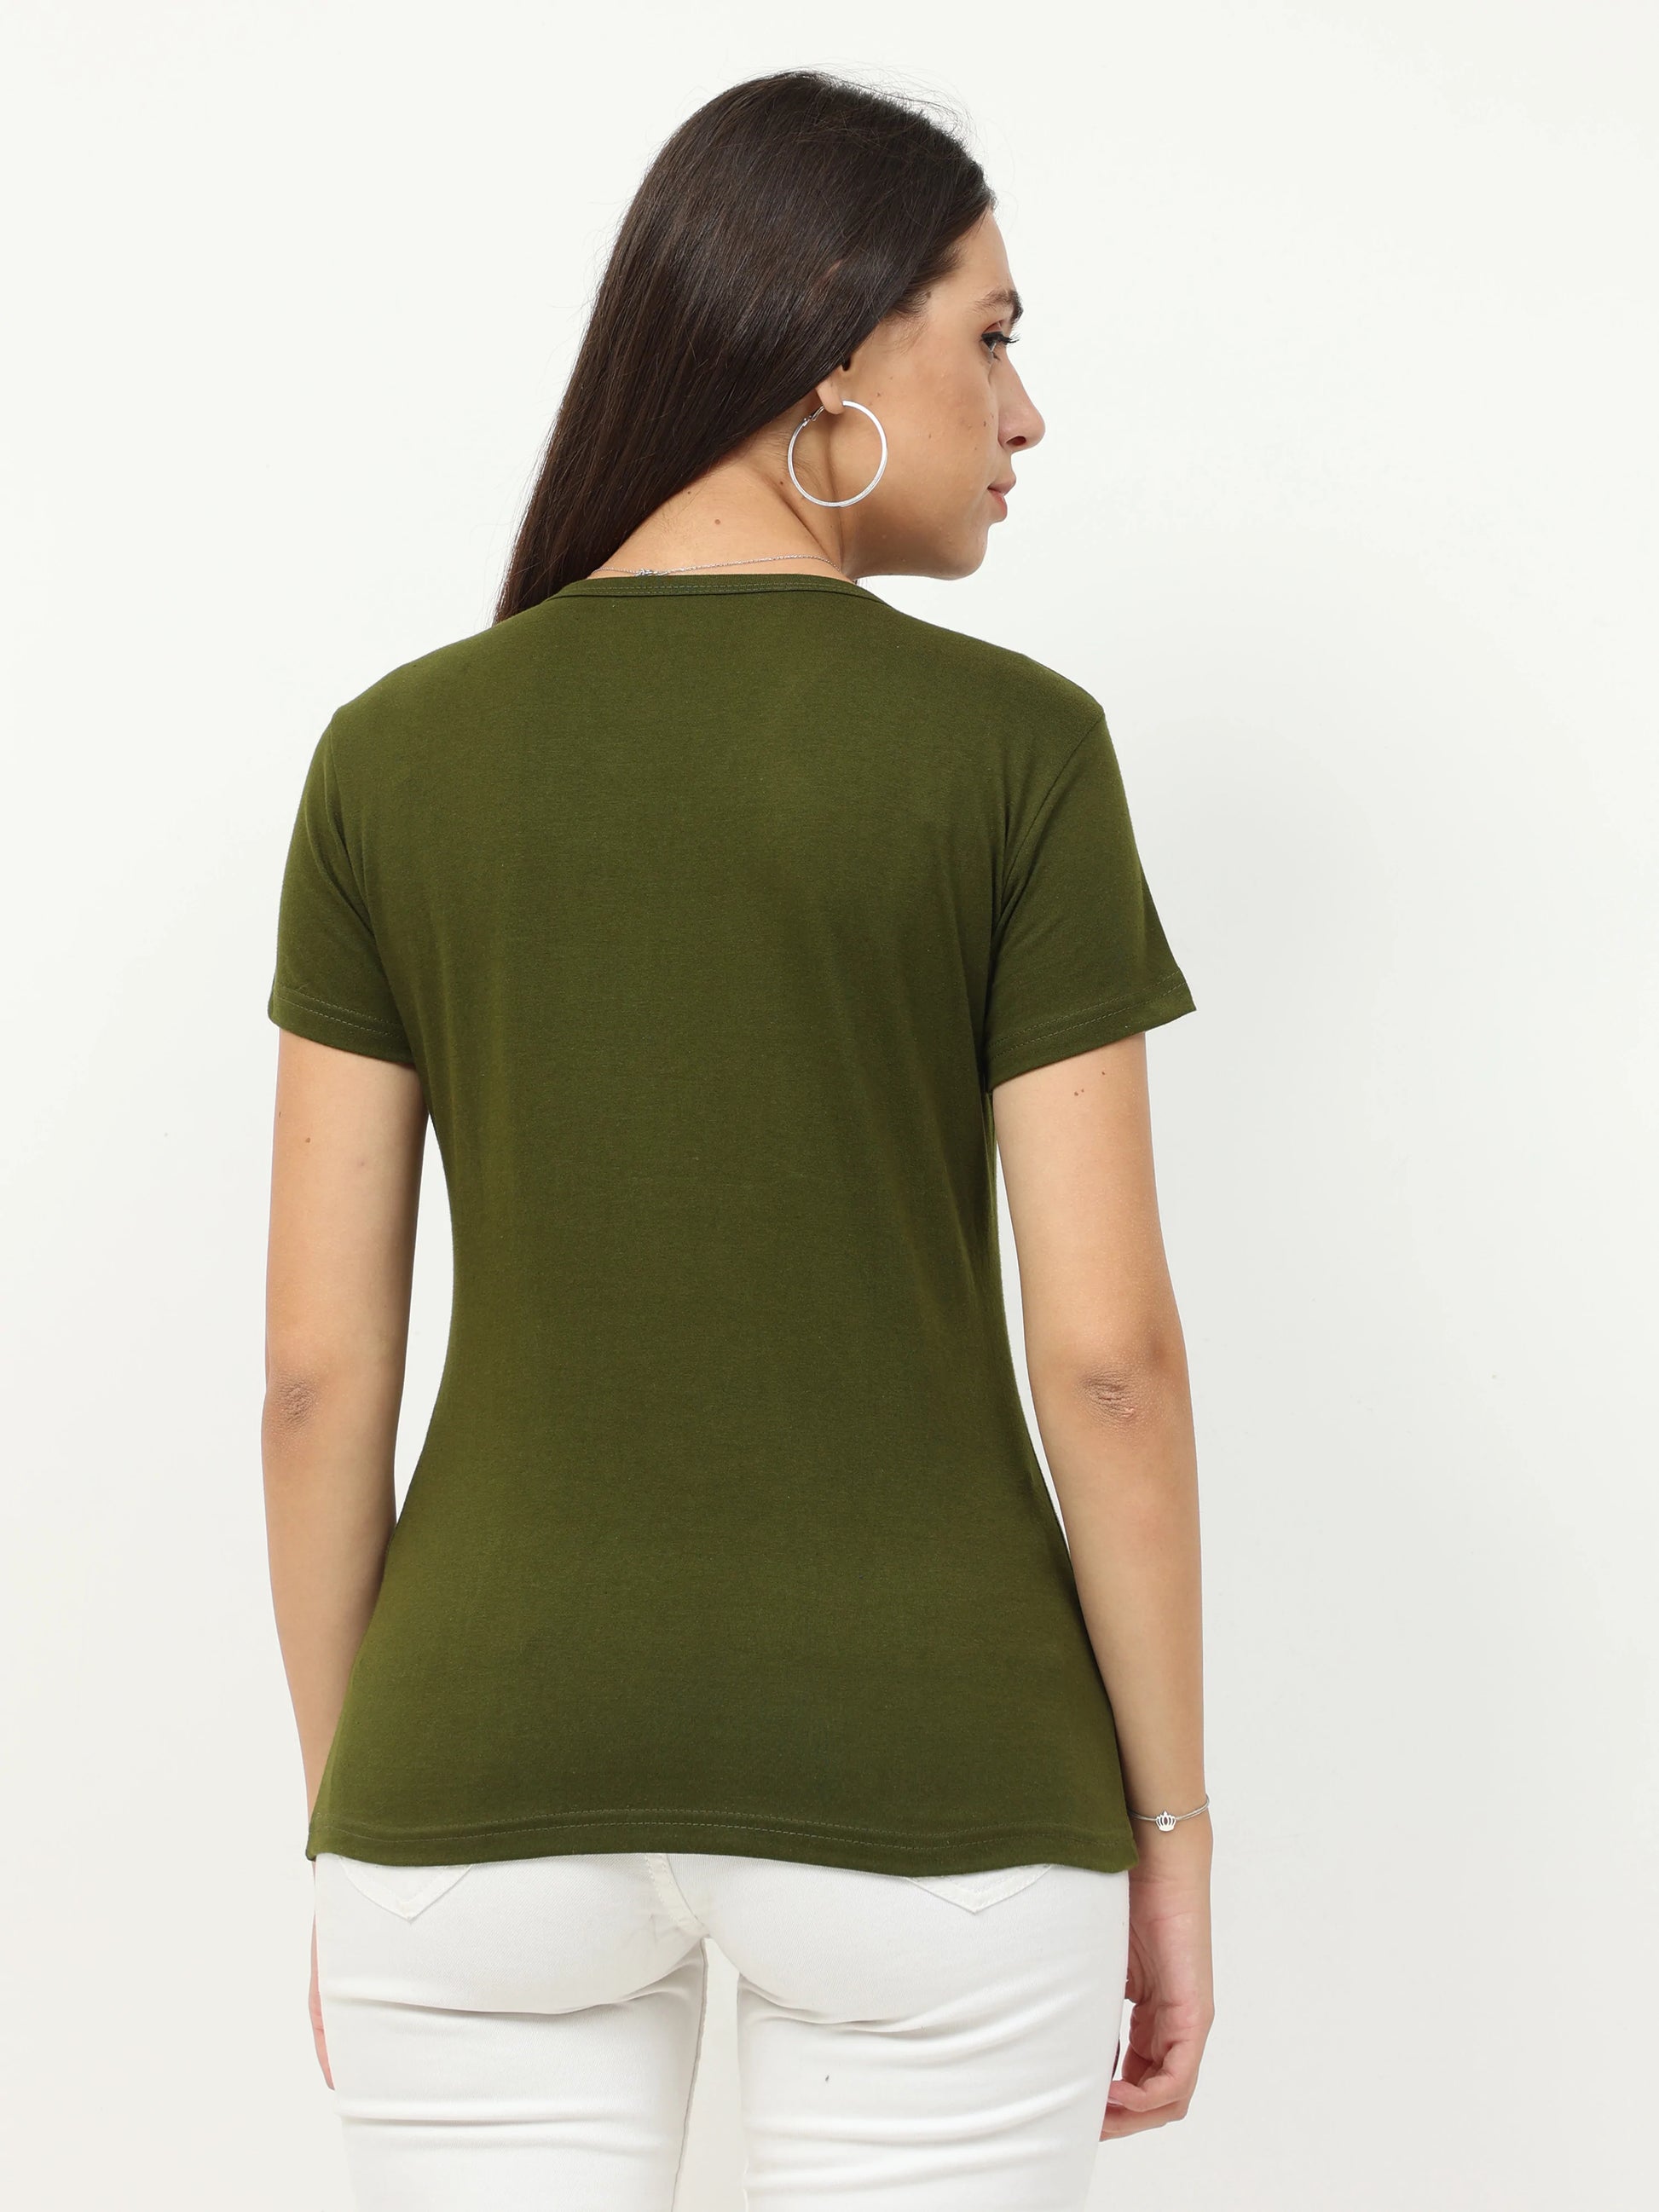 Women's plain olive green t shirt, T shirts for women